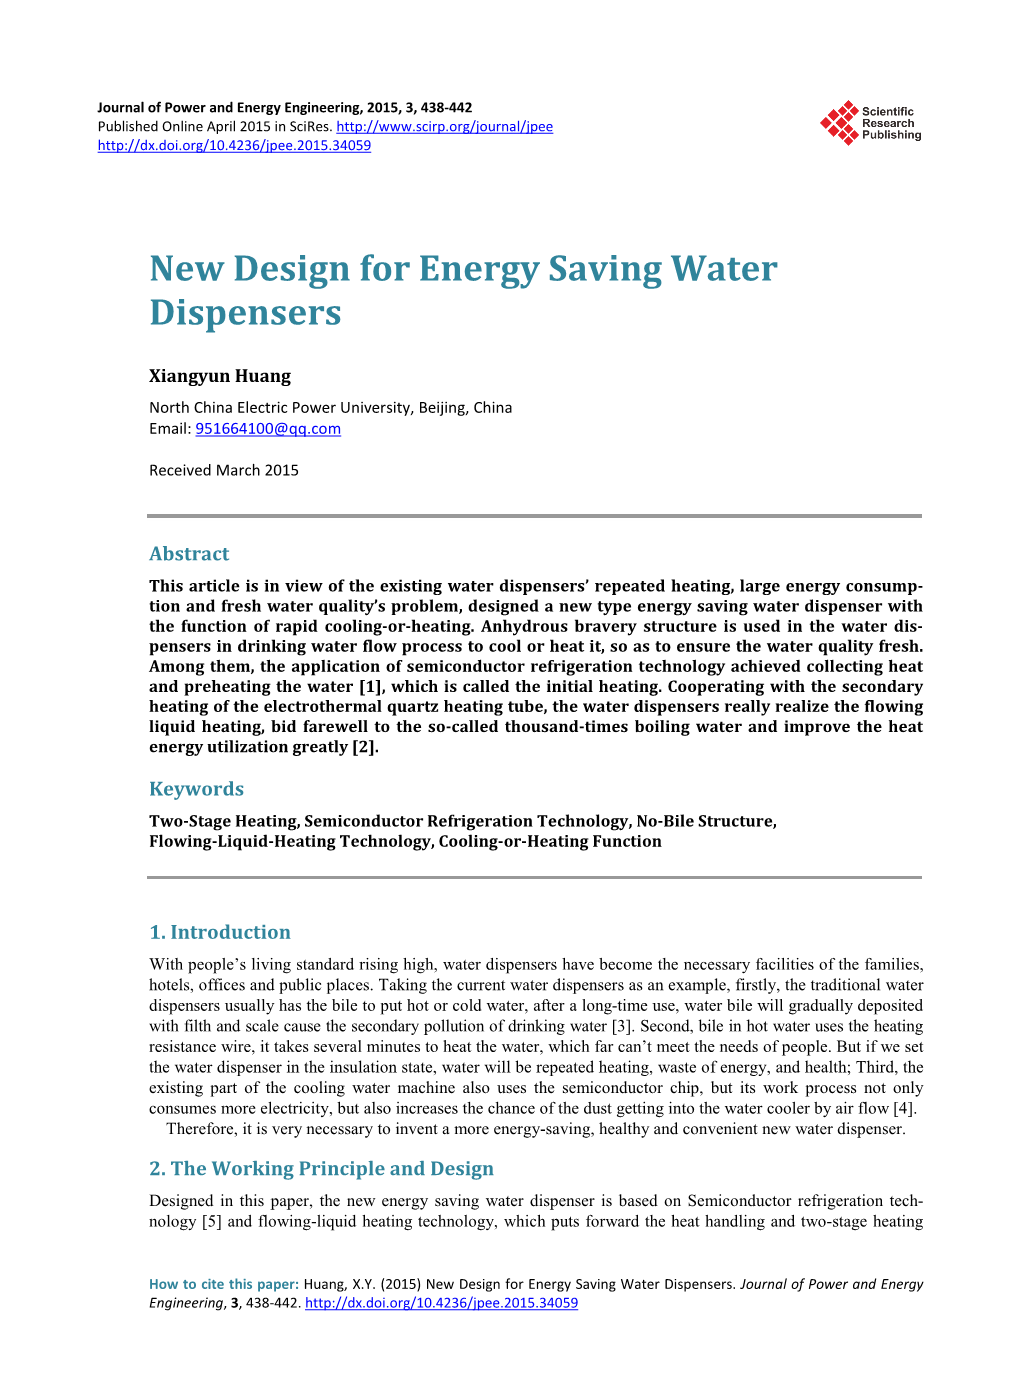 New Design for Energy Saving Water Dispensers